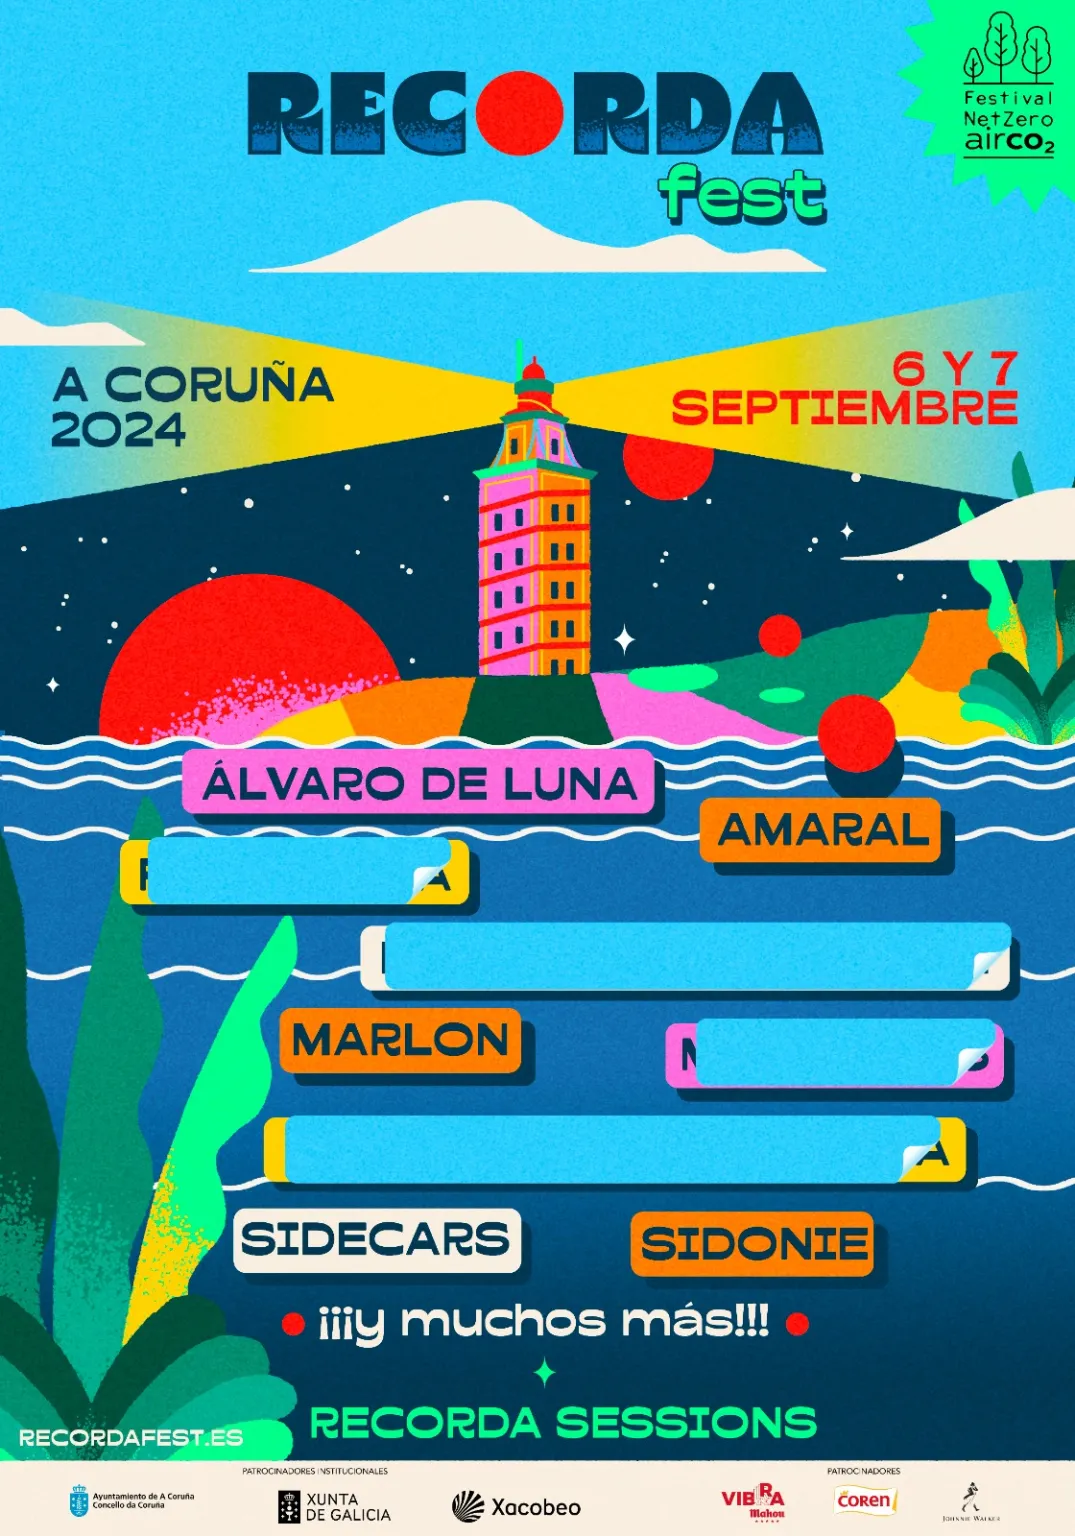 En este momento estás viendo Amaral, Sidecars, Ávaro de Luna, Sidonie e Marlon no Recorda Fest